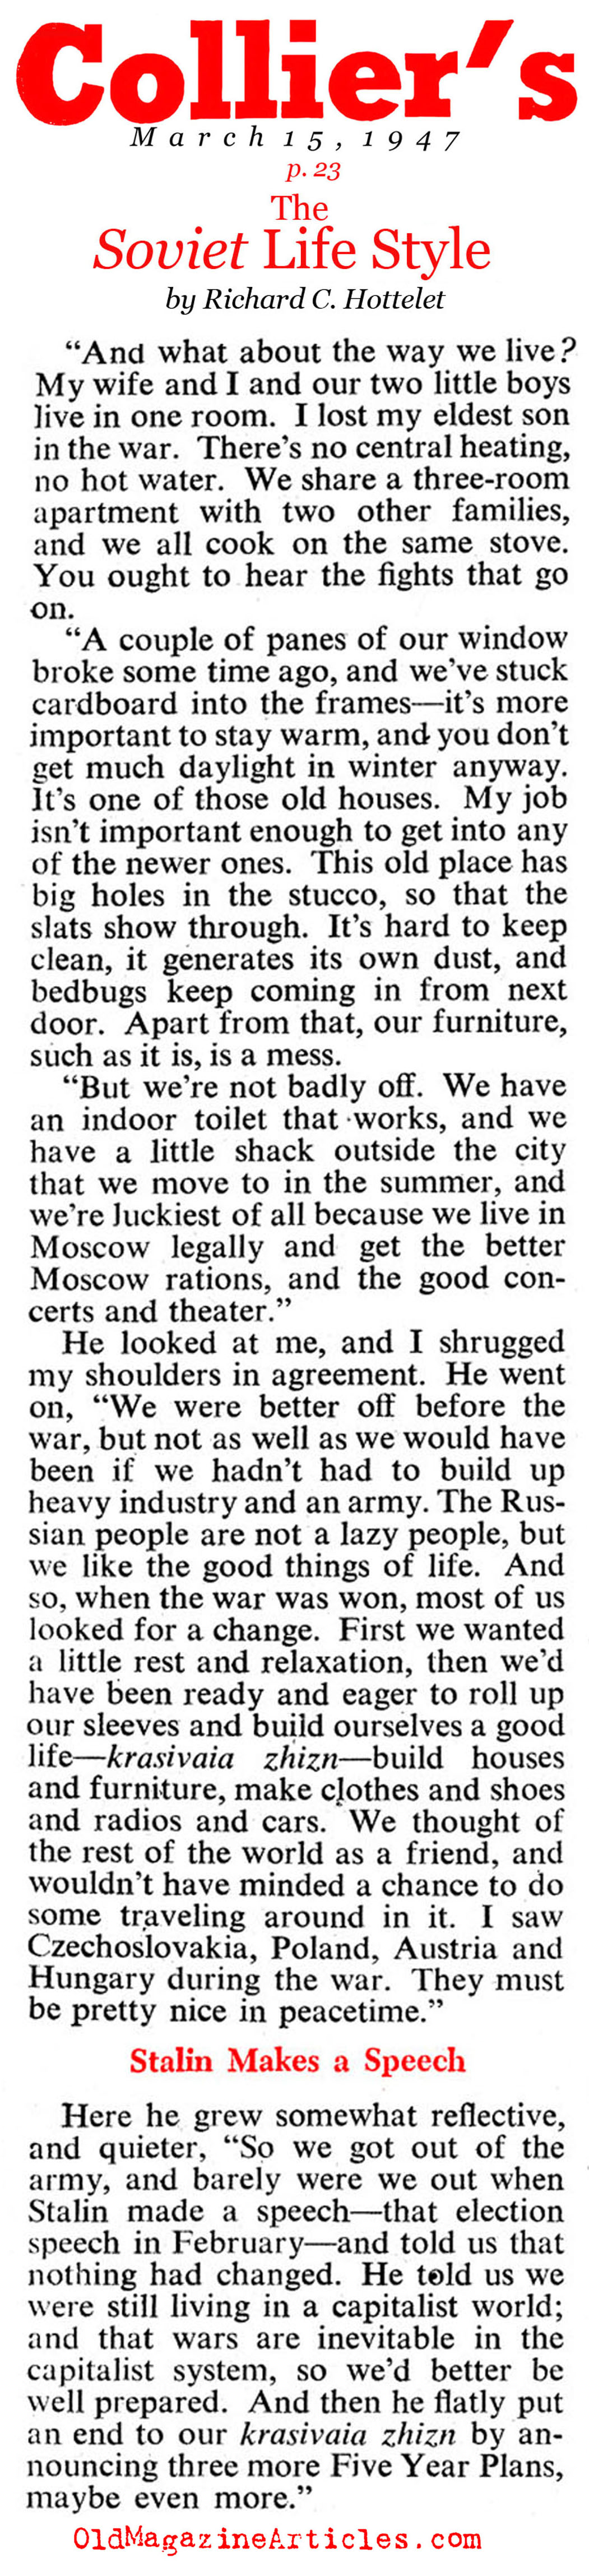 The Soviet Life Style (Collier's Magazine, 1947)